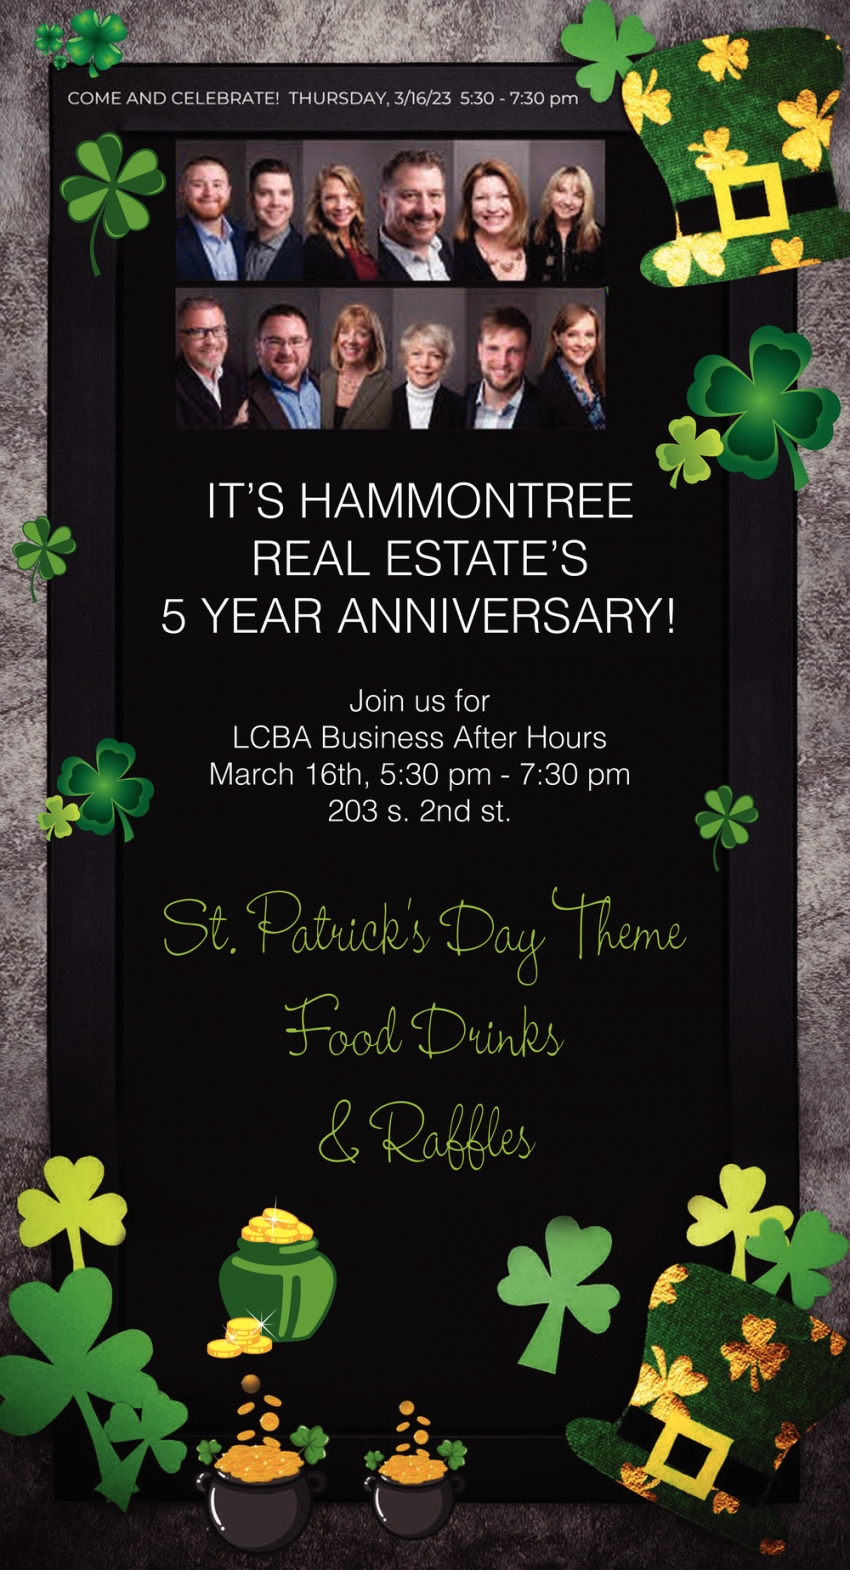 It's Hammontree Real Estate's 5 Year Anniversary!